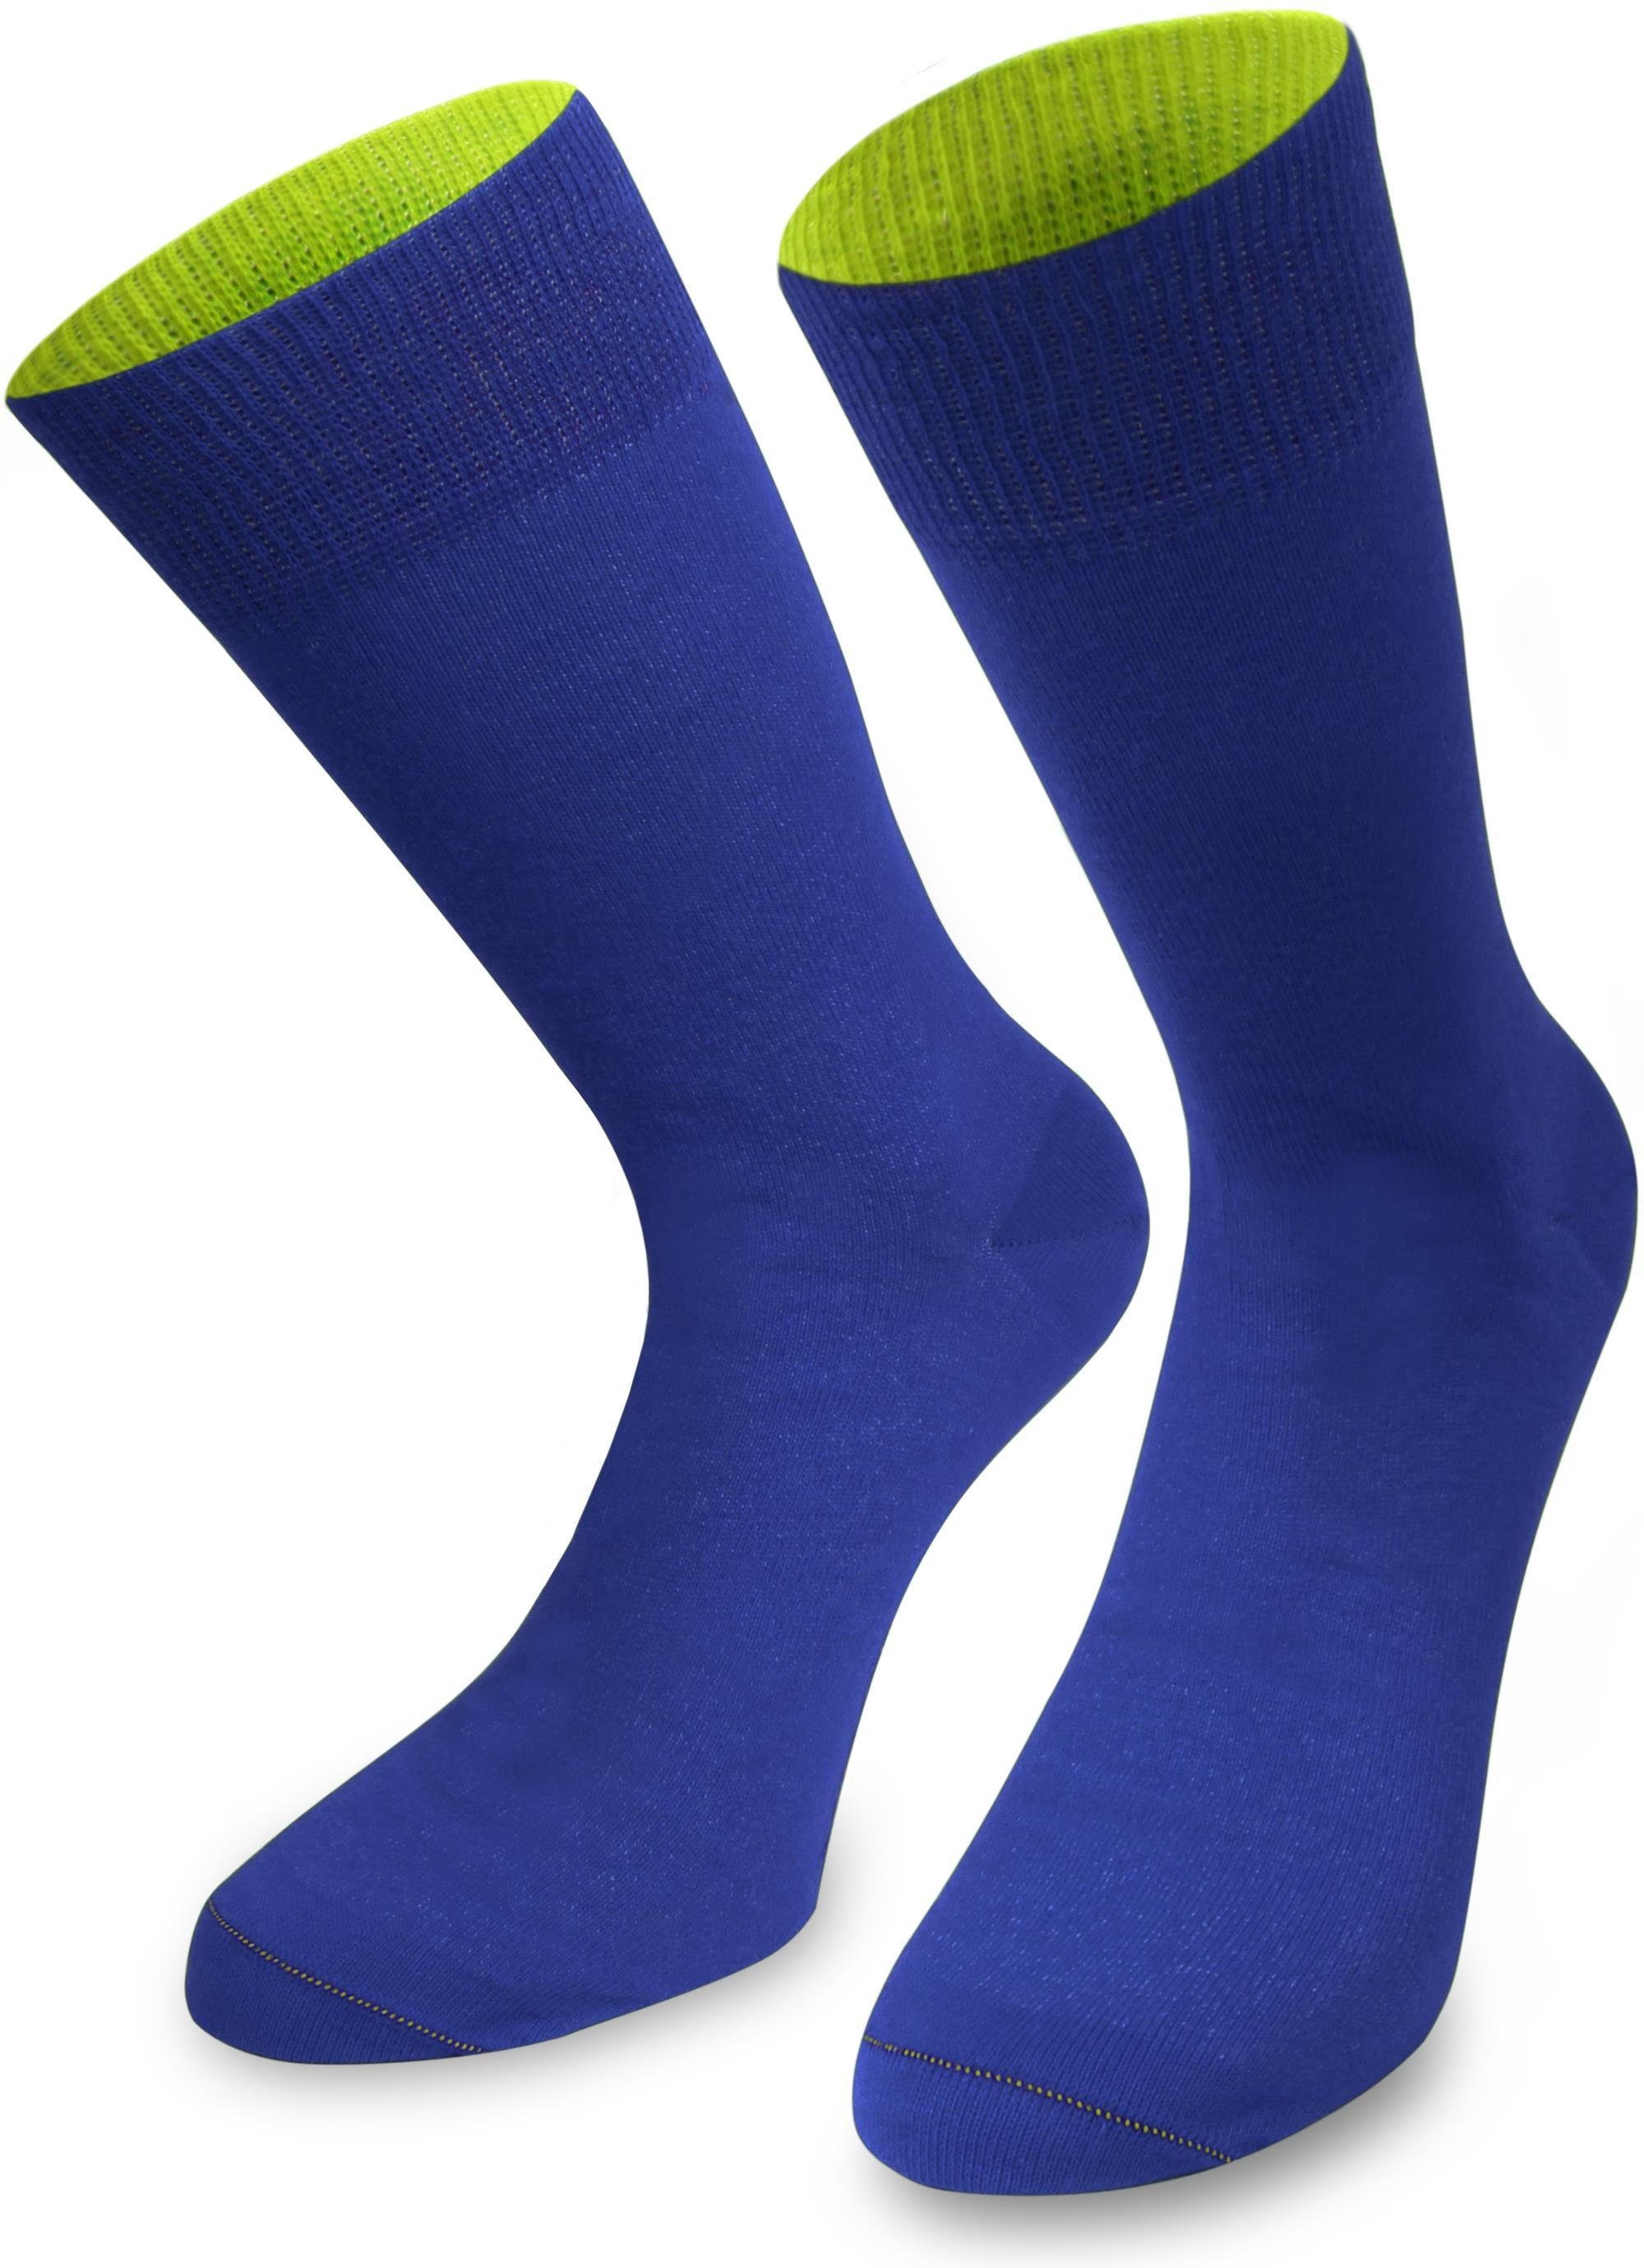 Basicsocken Bi-Color Socken abgesetzter Bund farbig Paar) normani (1 1 Paar Royalblau/Säuregelb